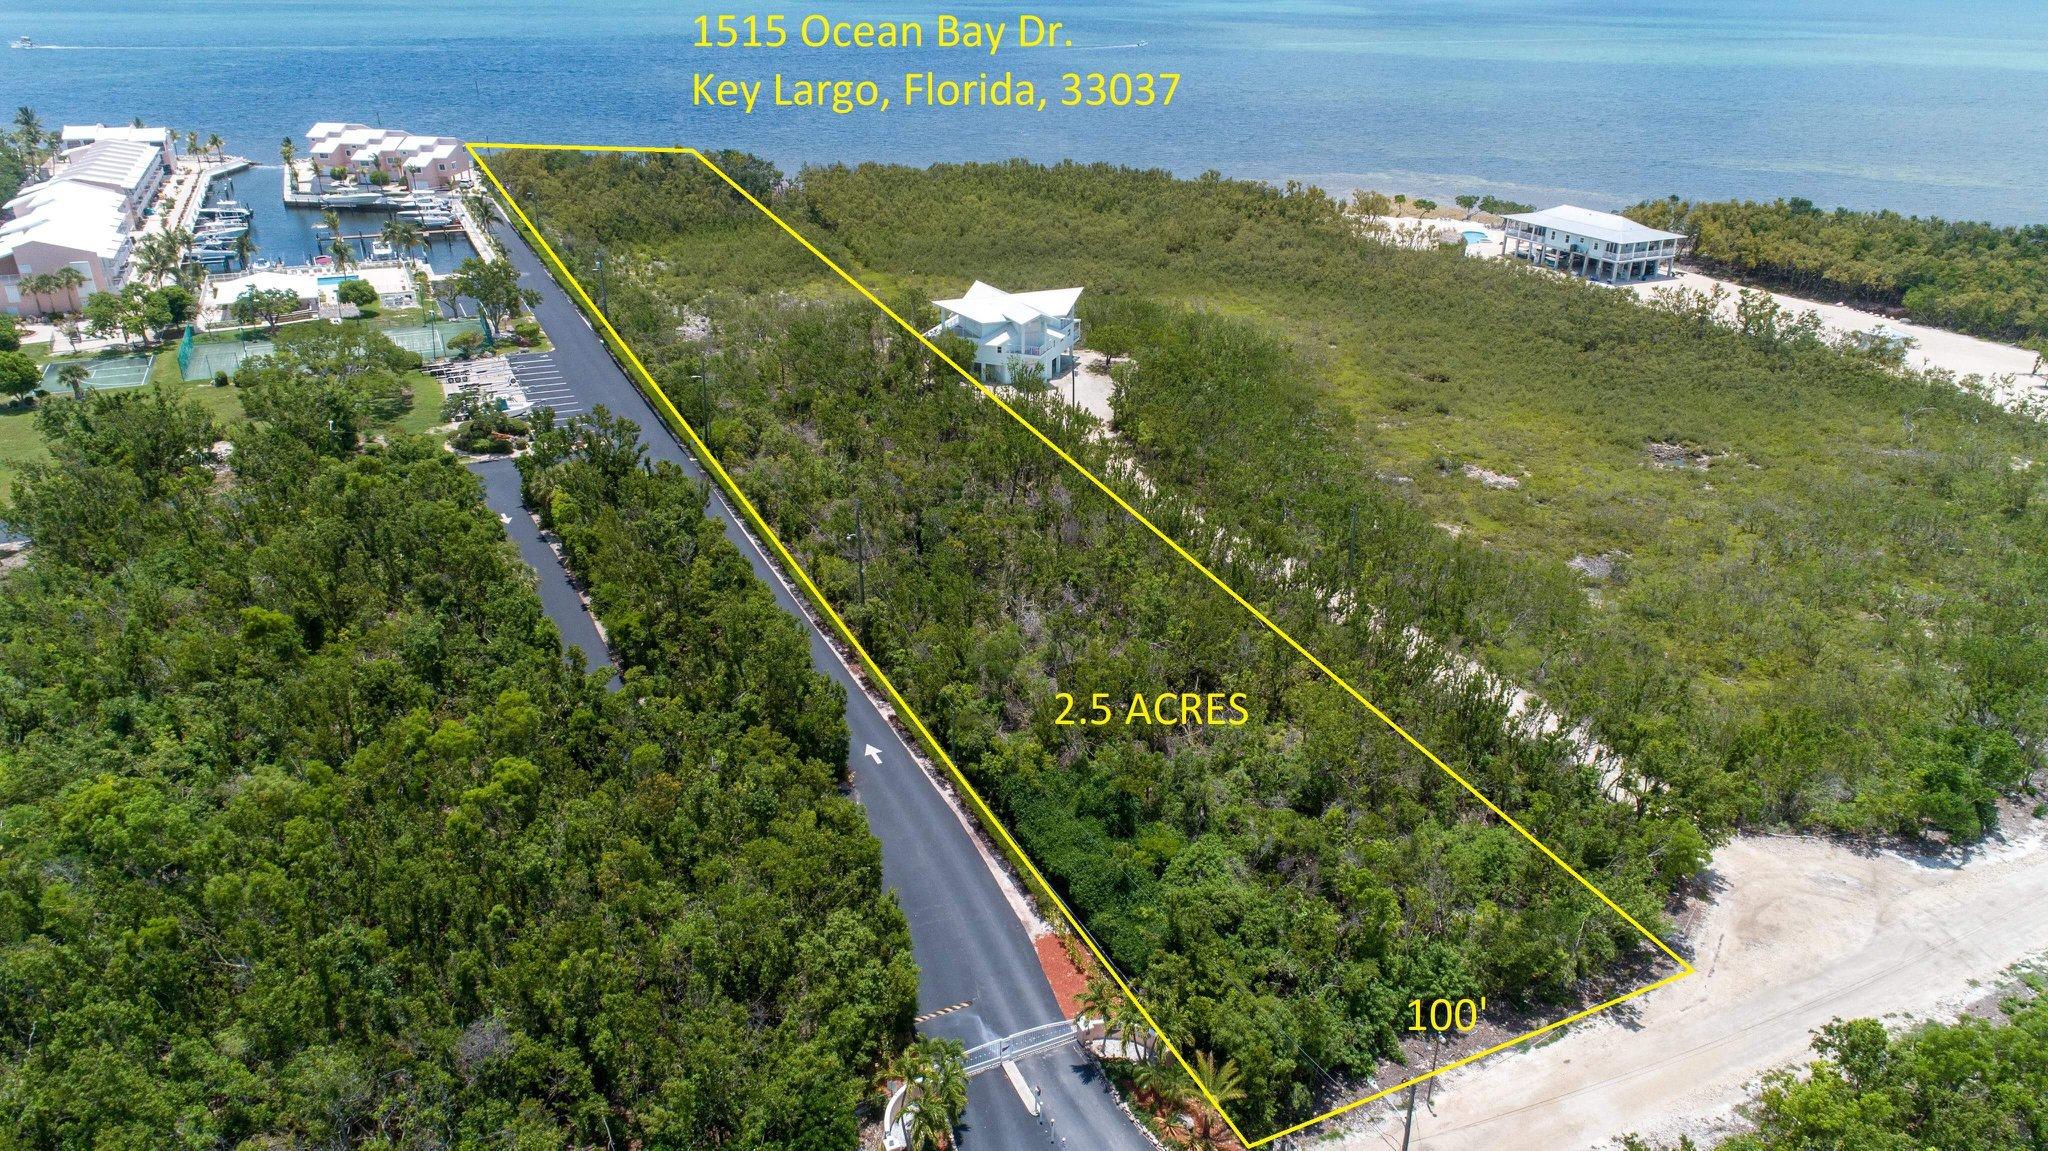 Ocean Acres (100.0) Real Estate Listings Main Image